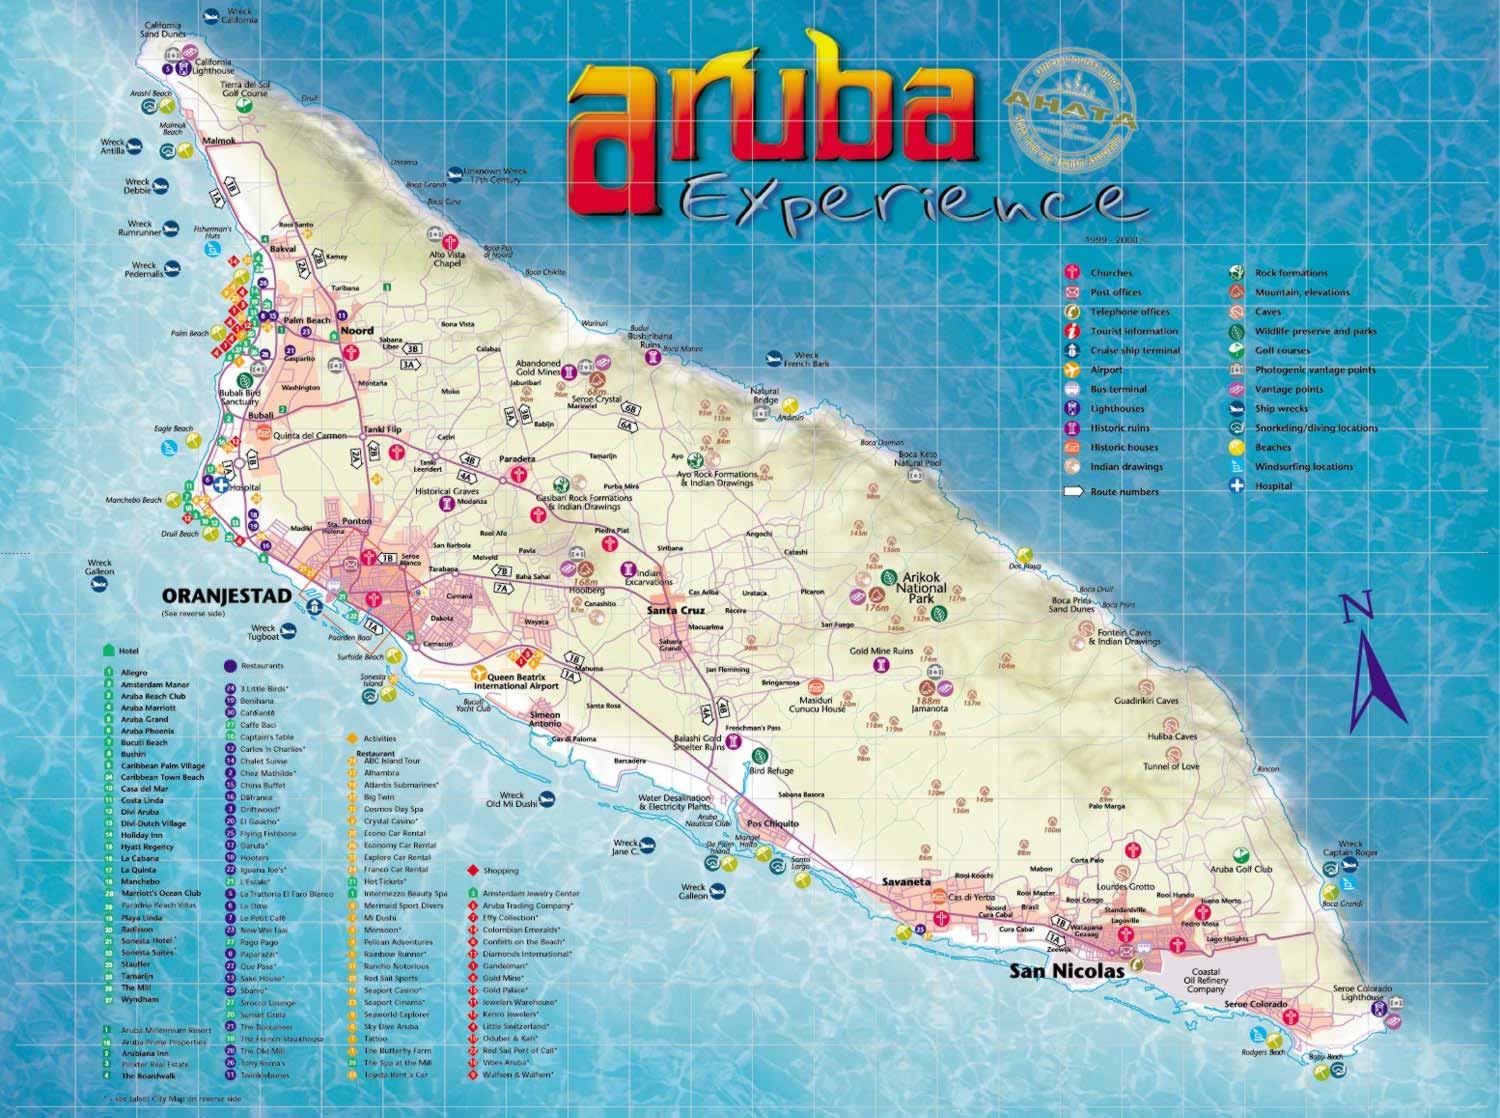 aruba travel forum